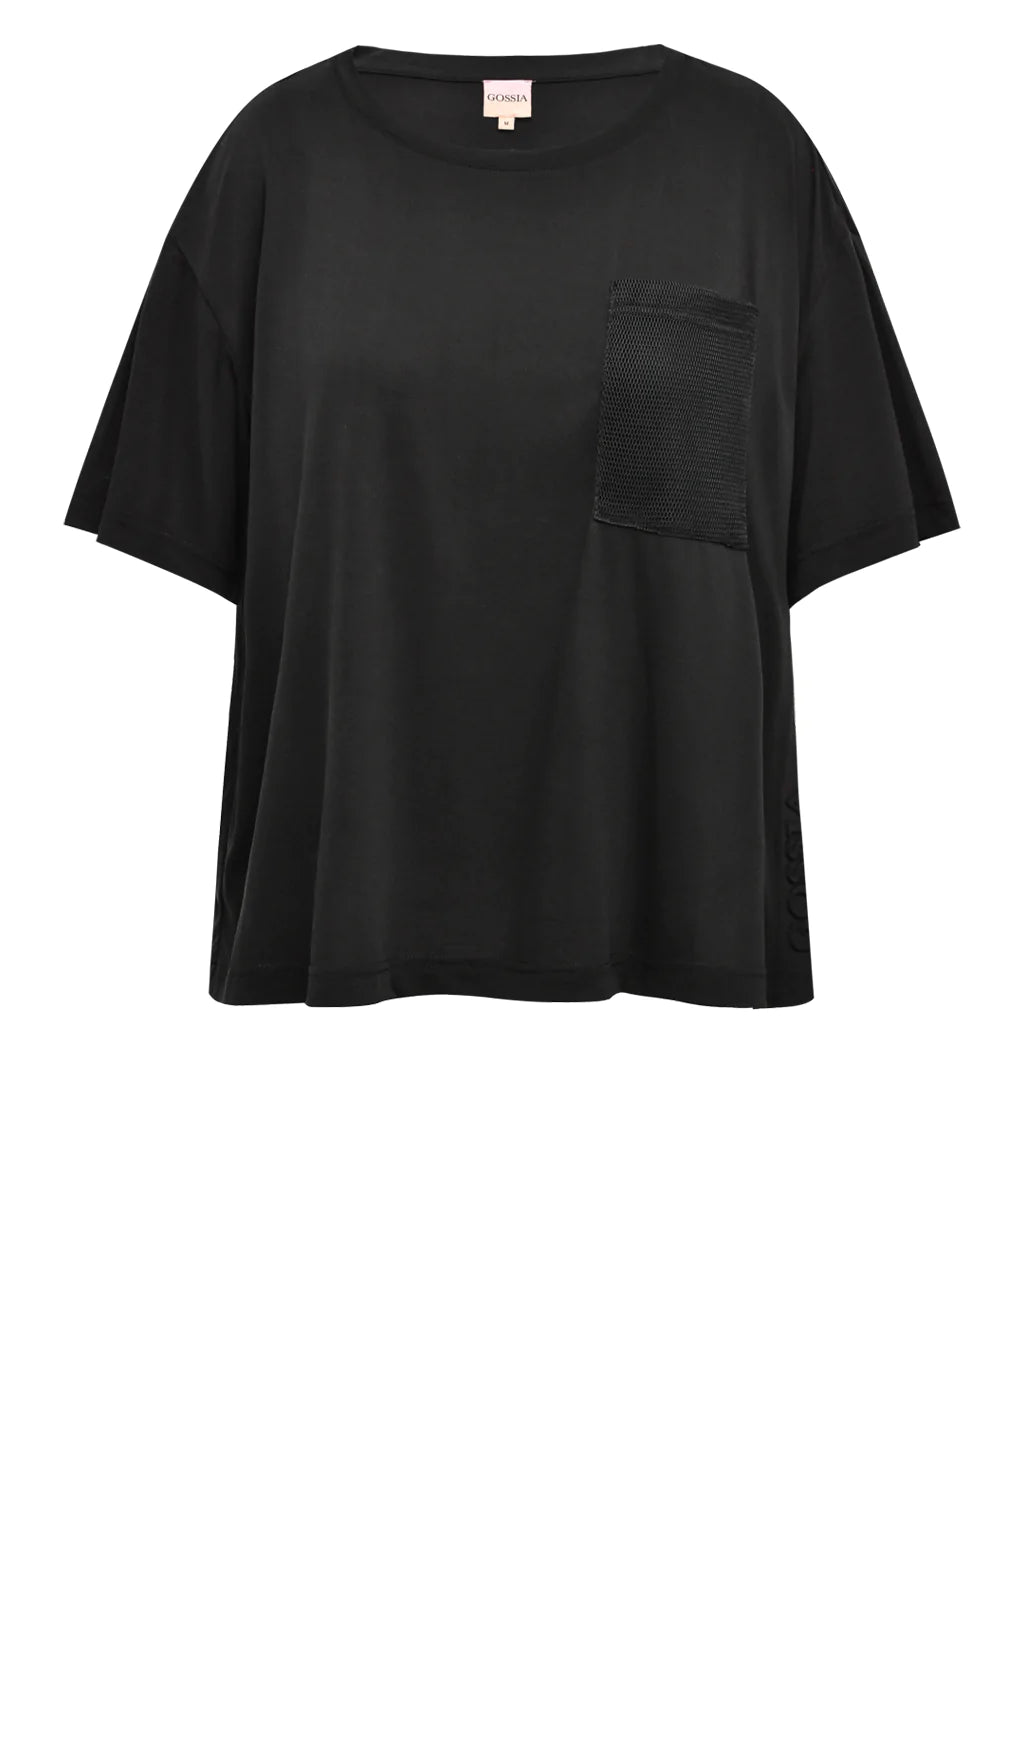 ThitGo Tee, Black, T-shirt fra Gossia